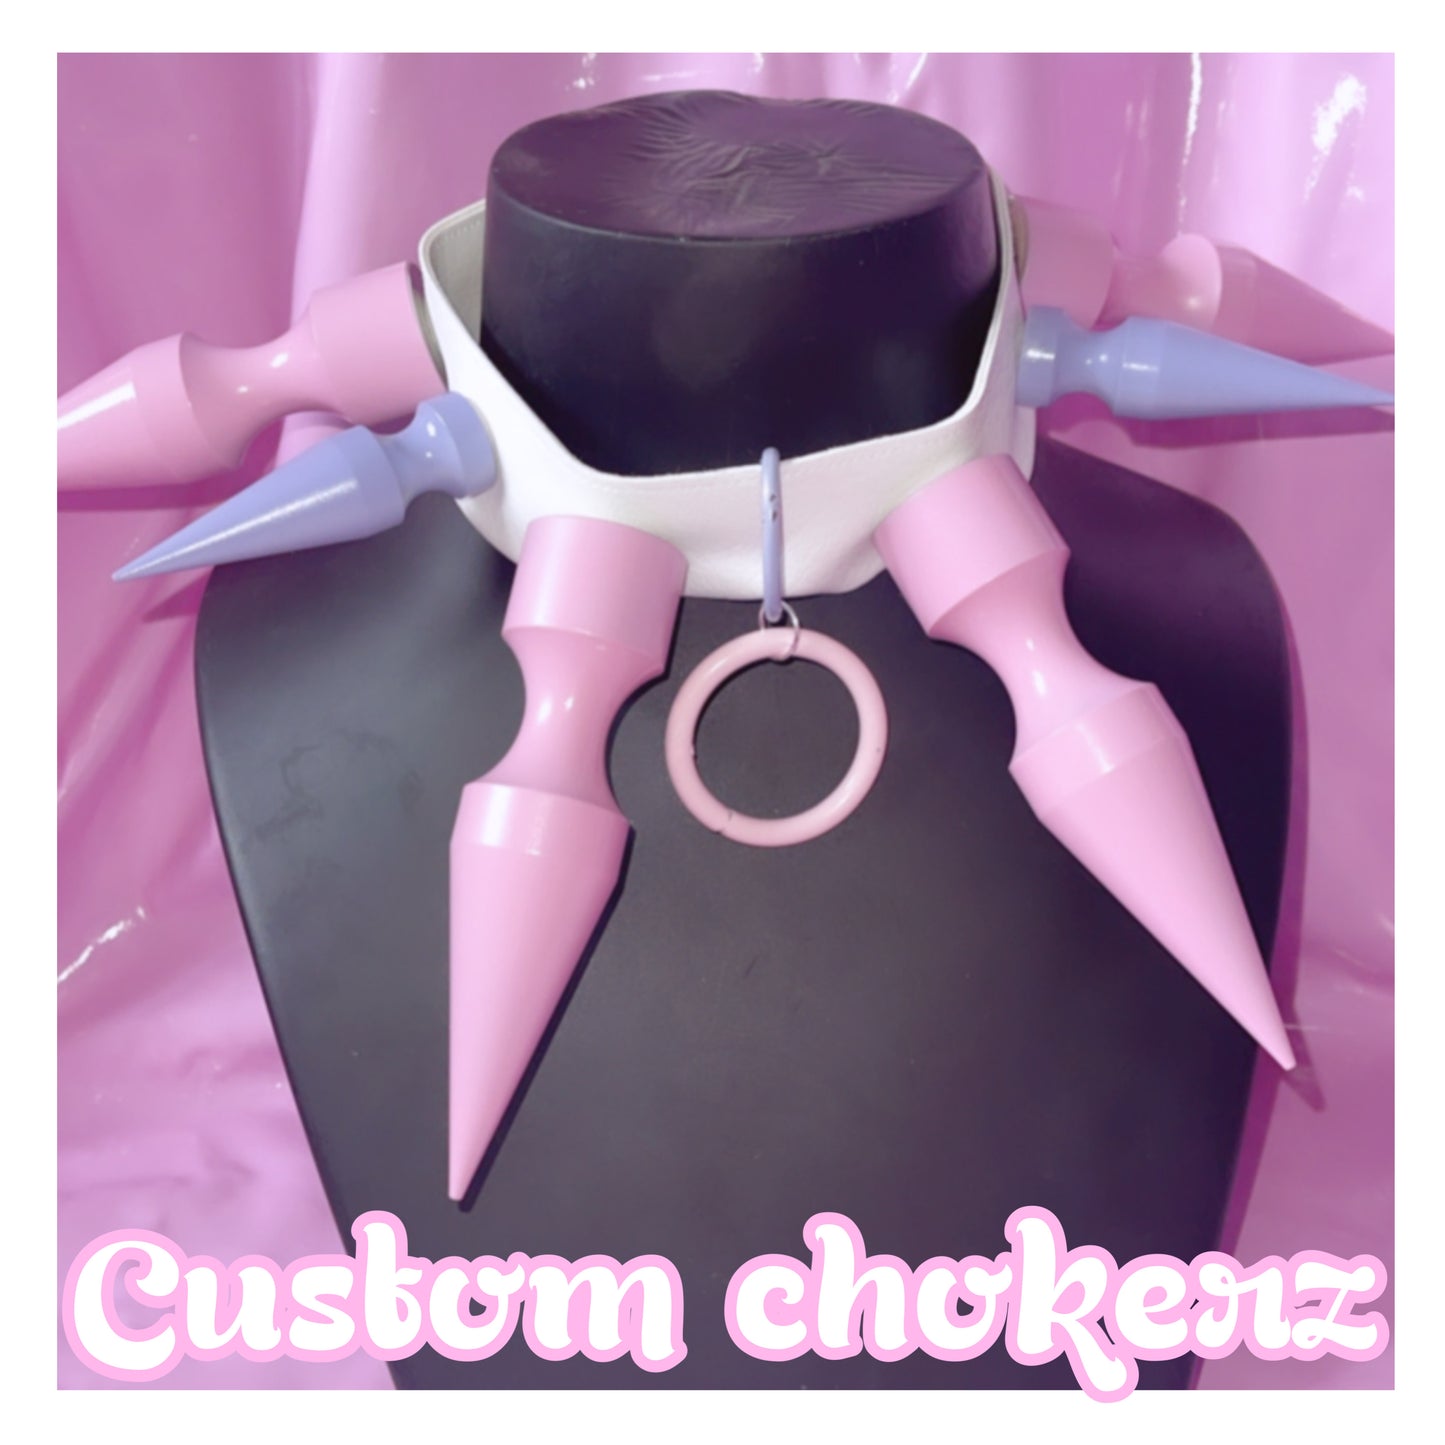 Custom chokerz